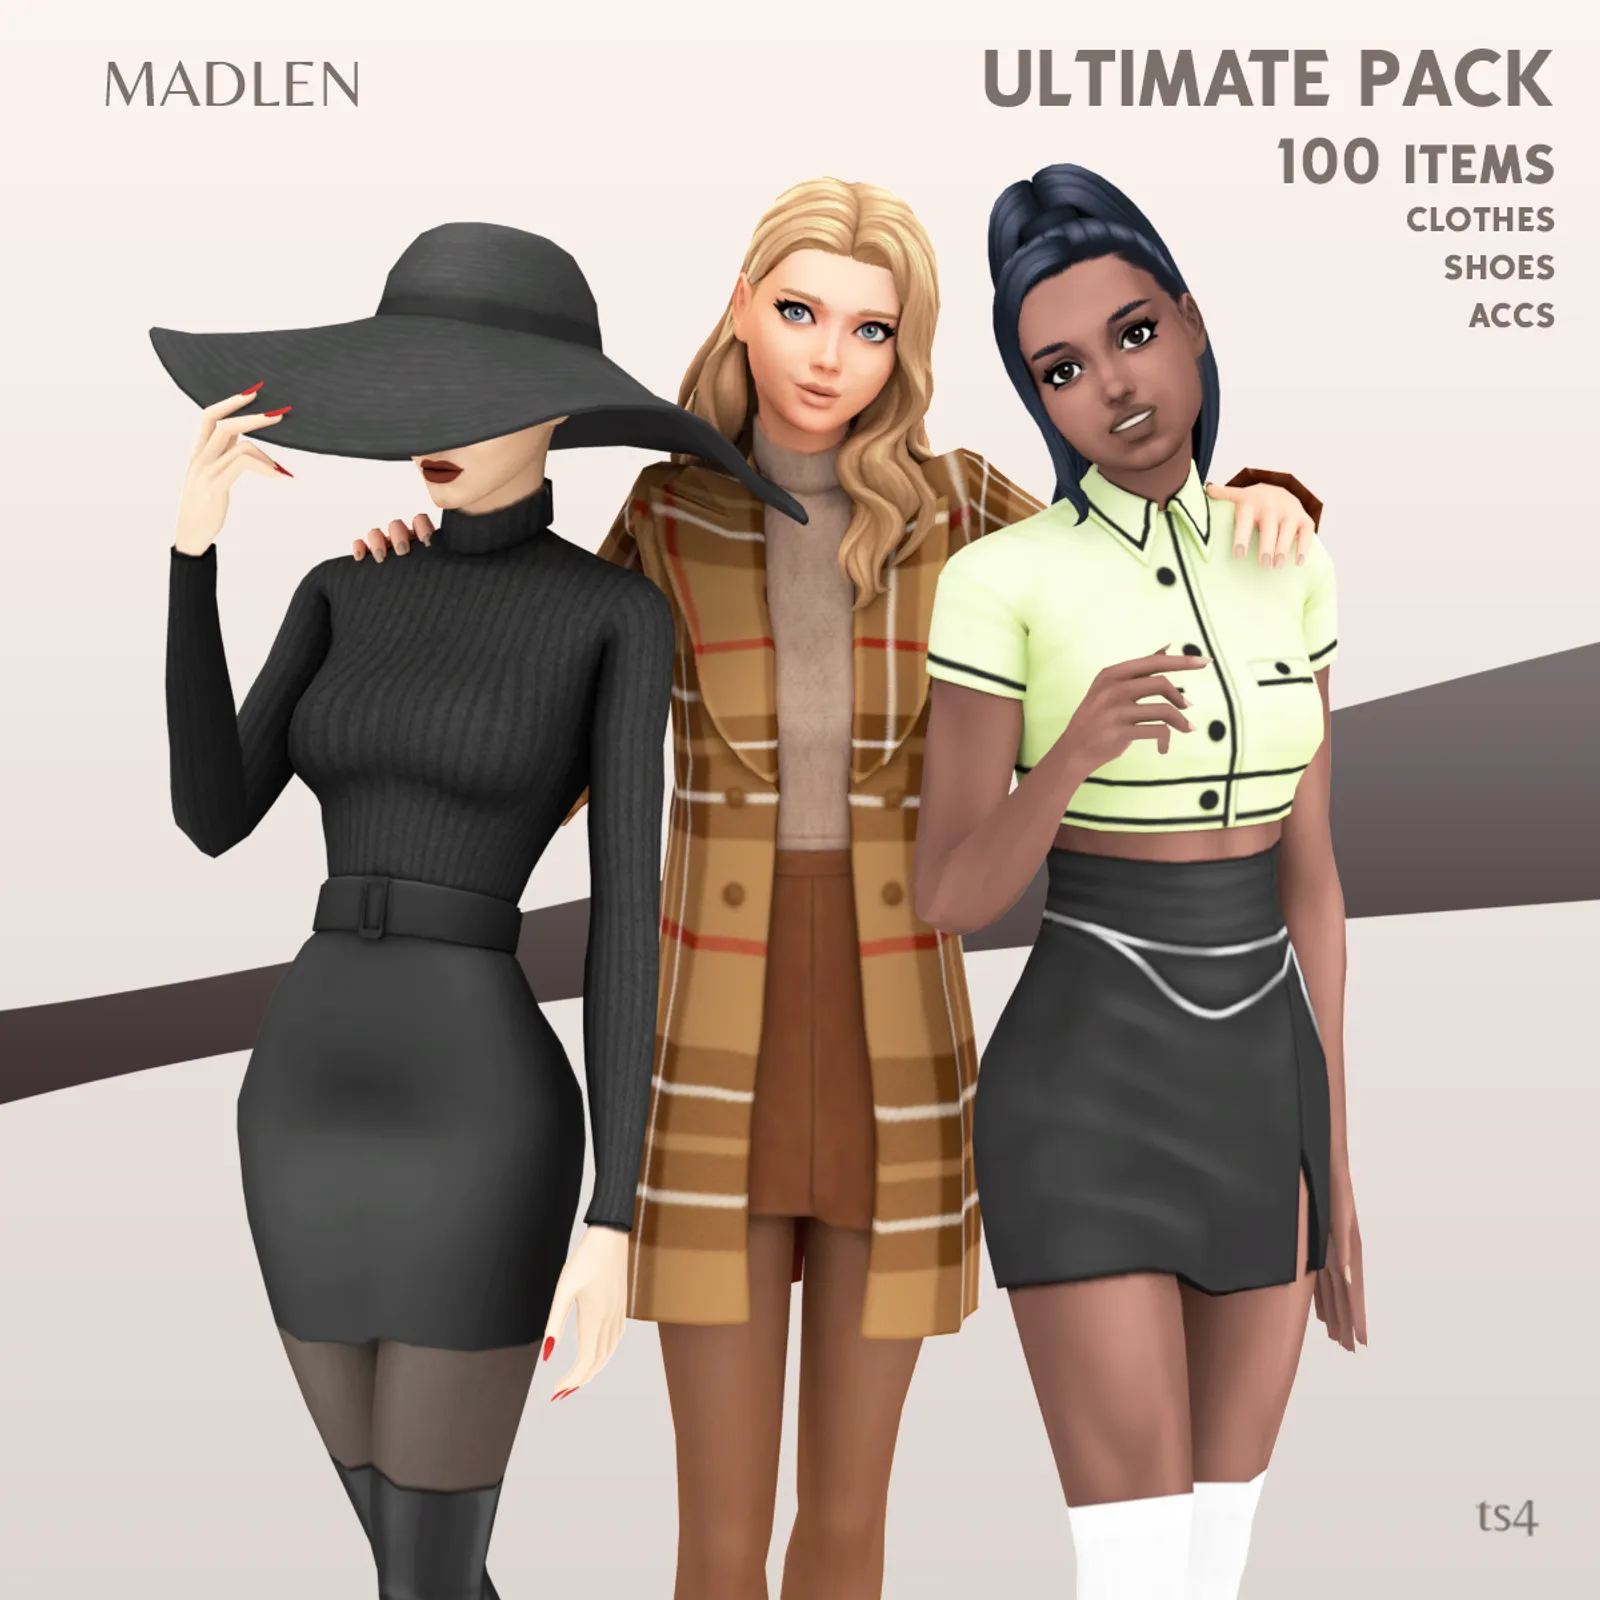 Madlen Ultimate Pack